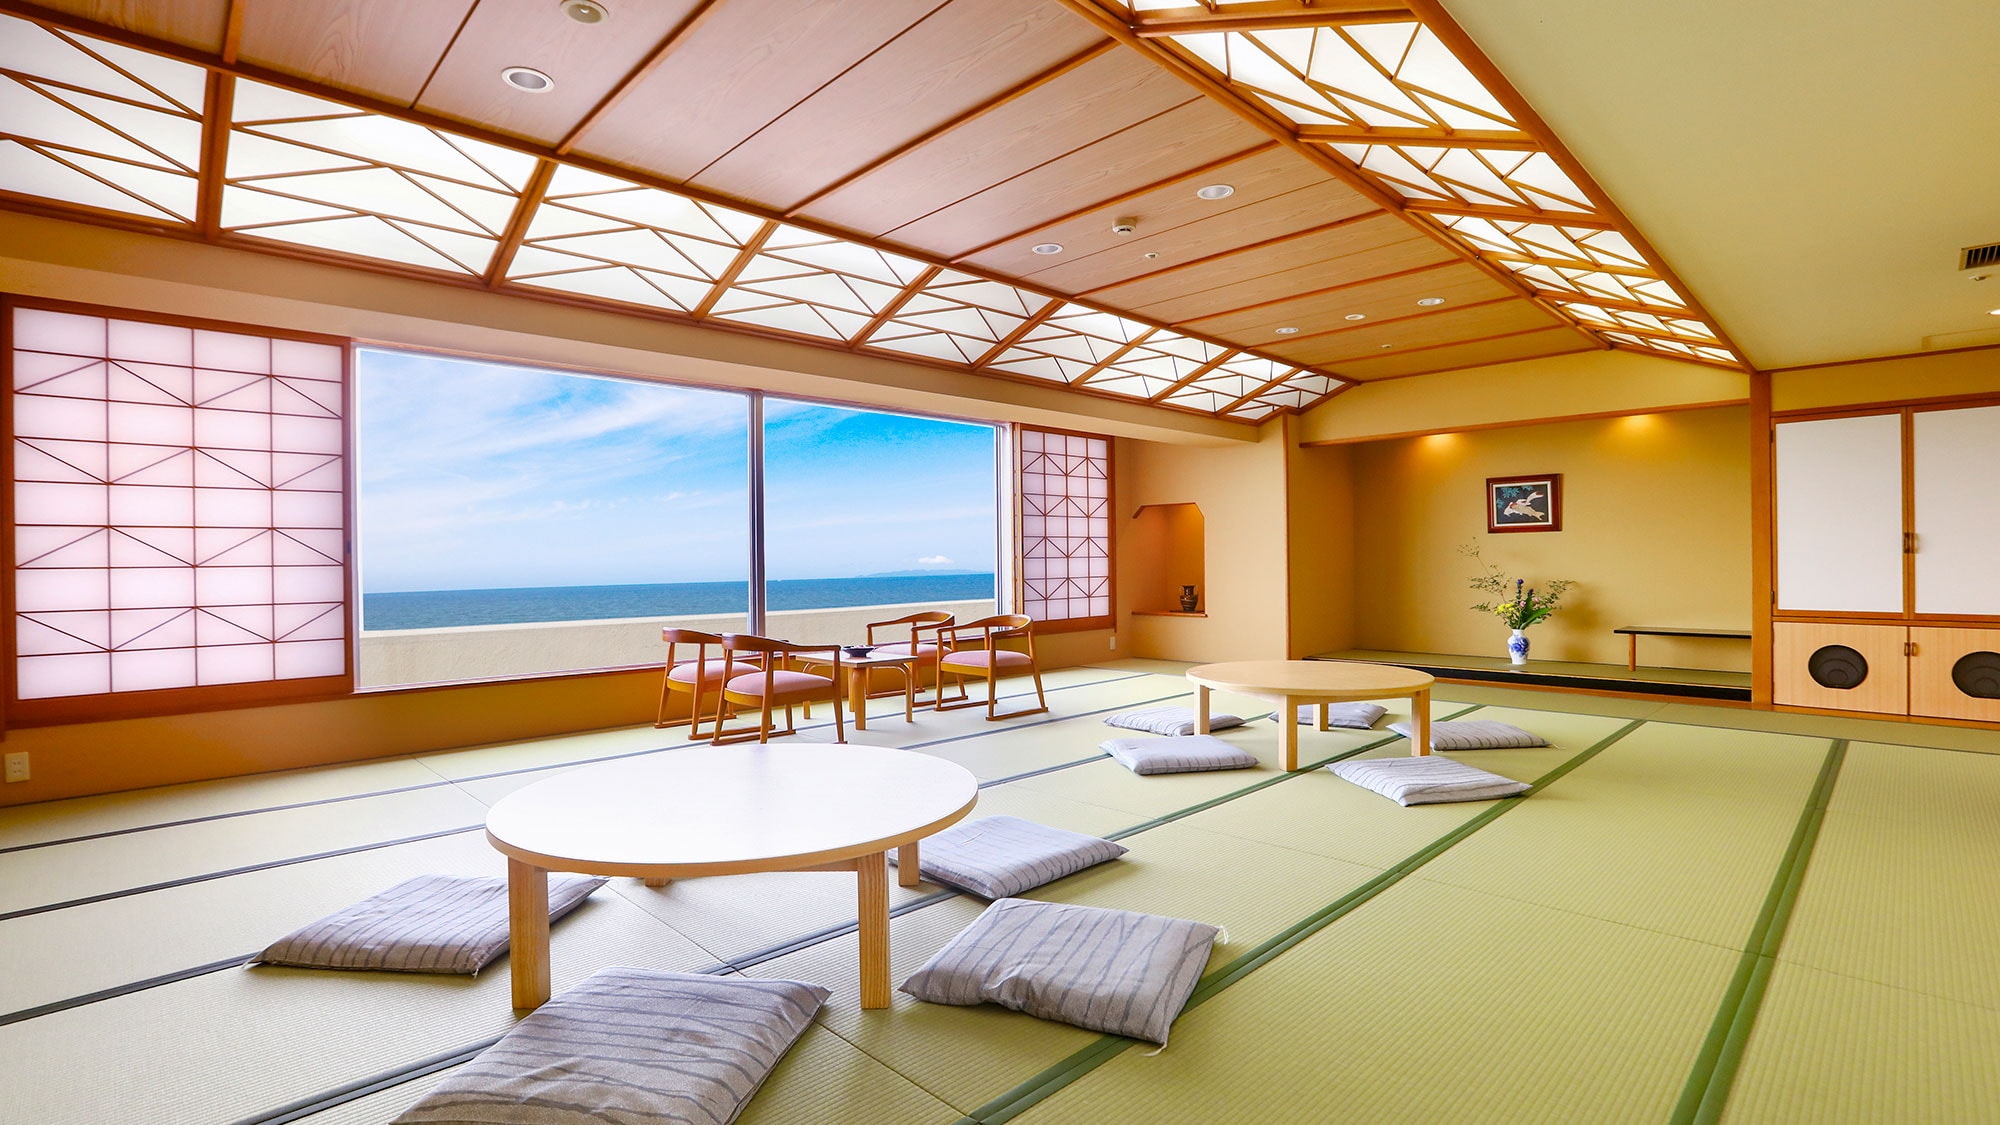 [Non-smoking] Ocean view Japanese-style room 28 tatami mats (no bath)